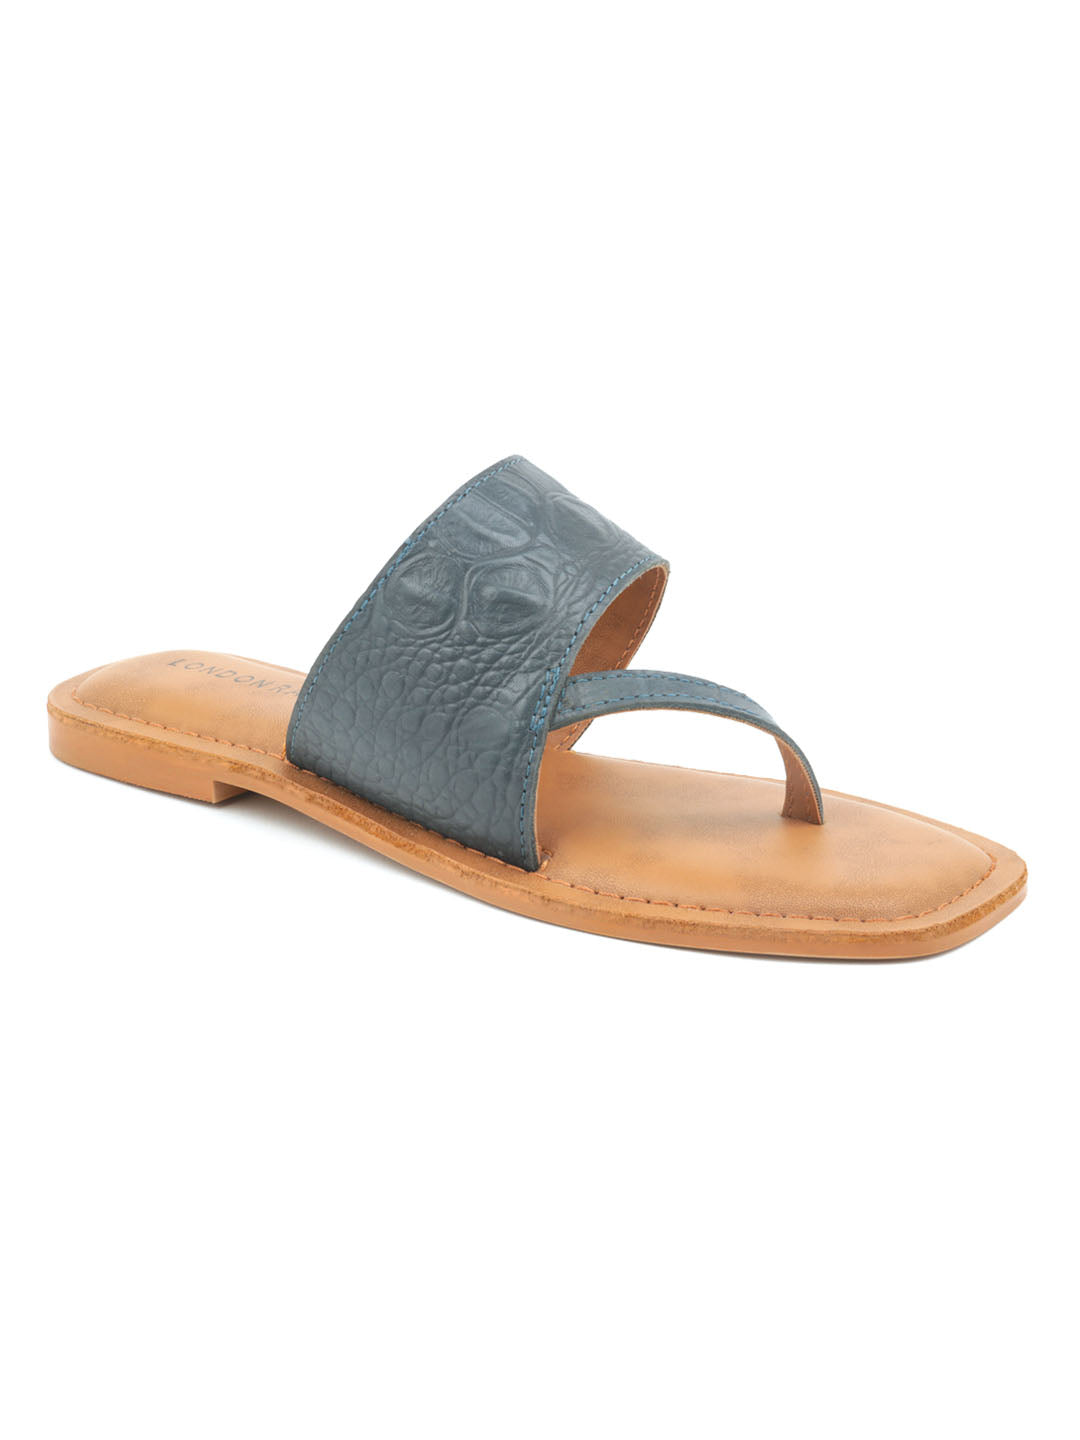 Grey Croc Print One Toe Flat Sandal - Grey